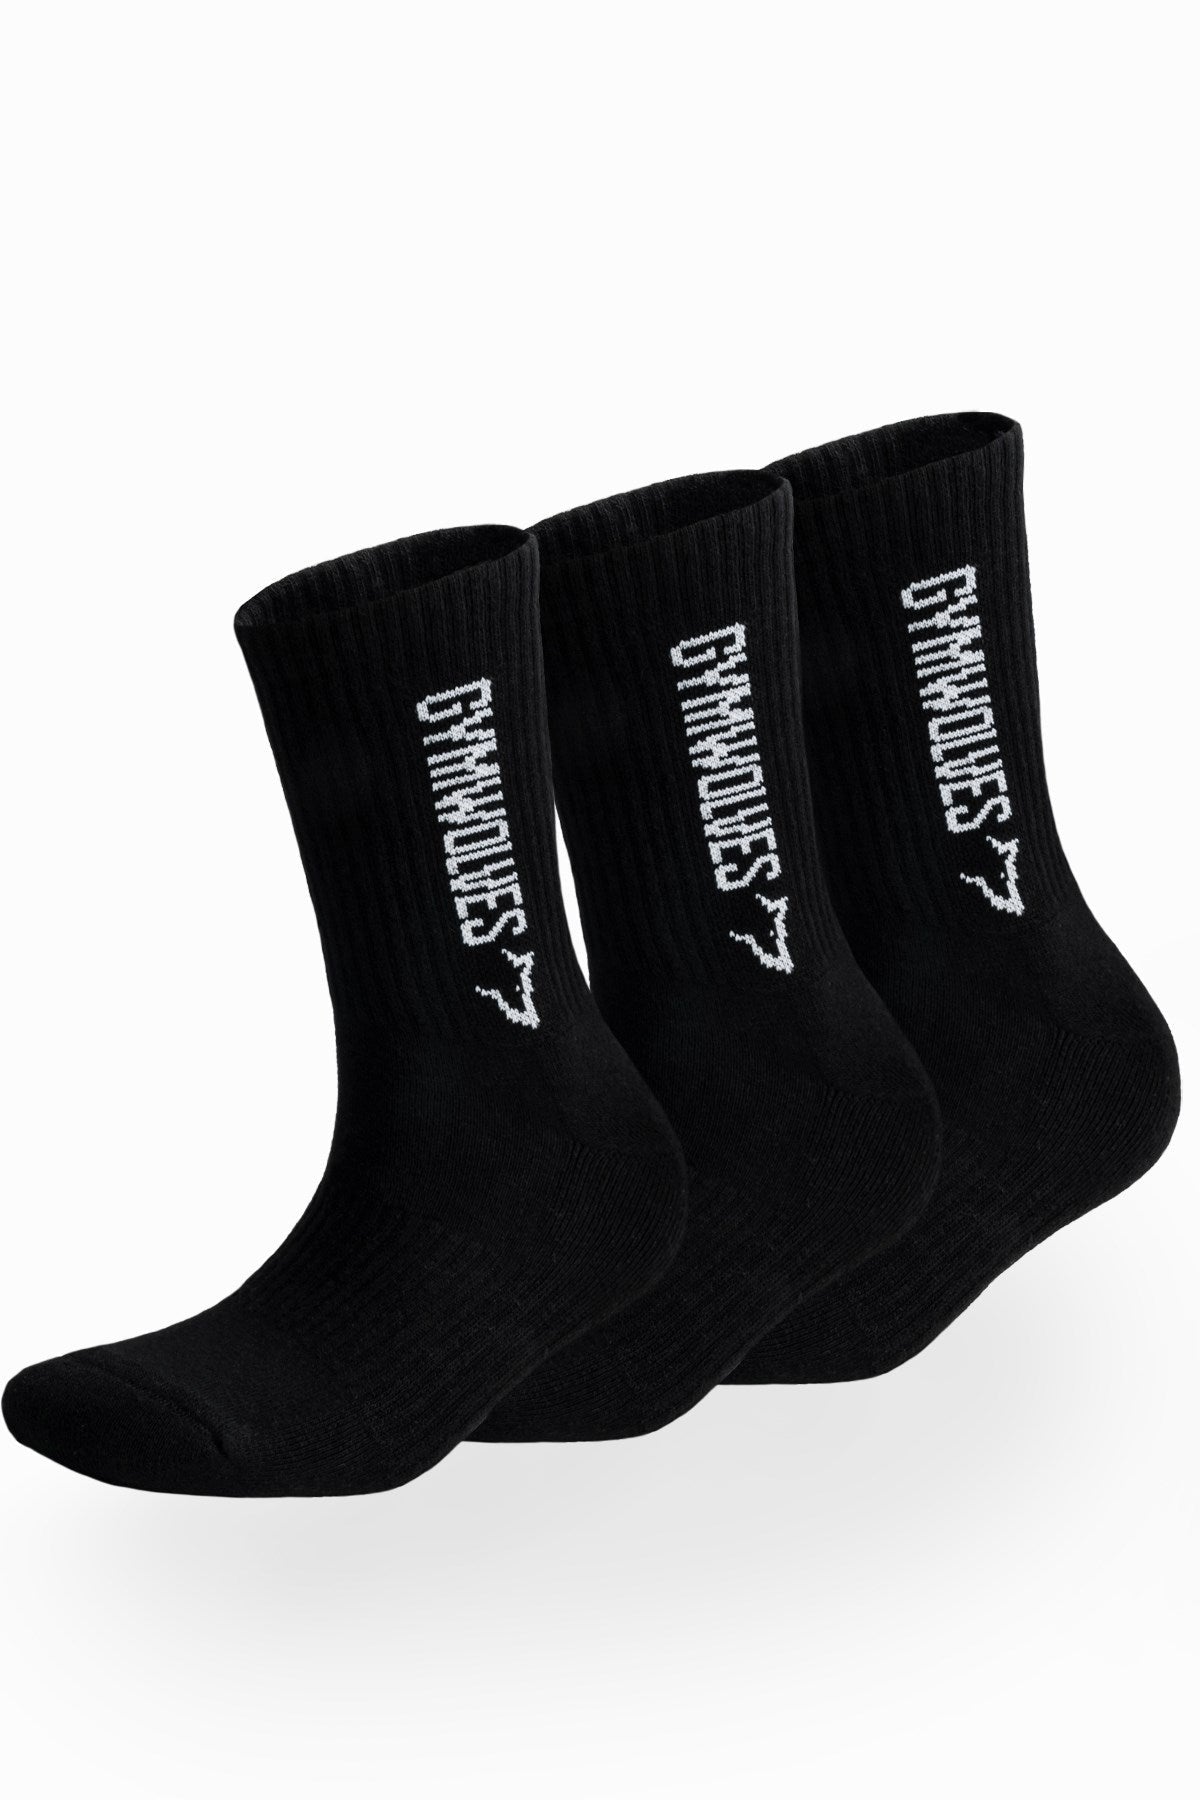 Gymwolves Athletic Sports 3 Socks | Unisex Socks